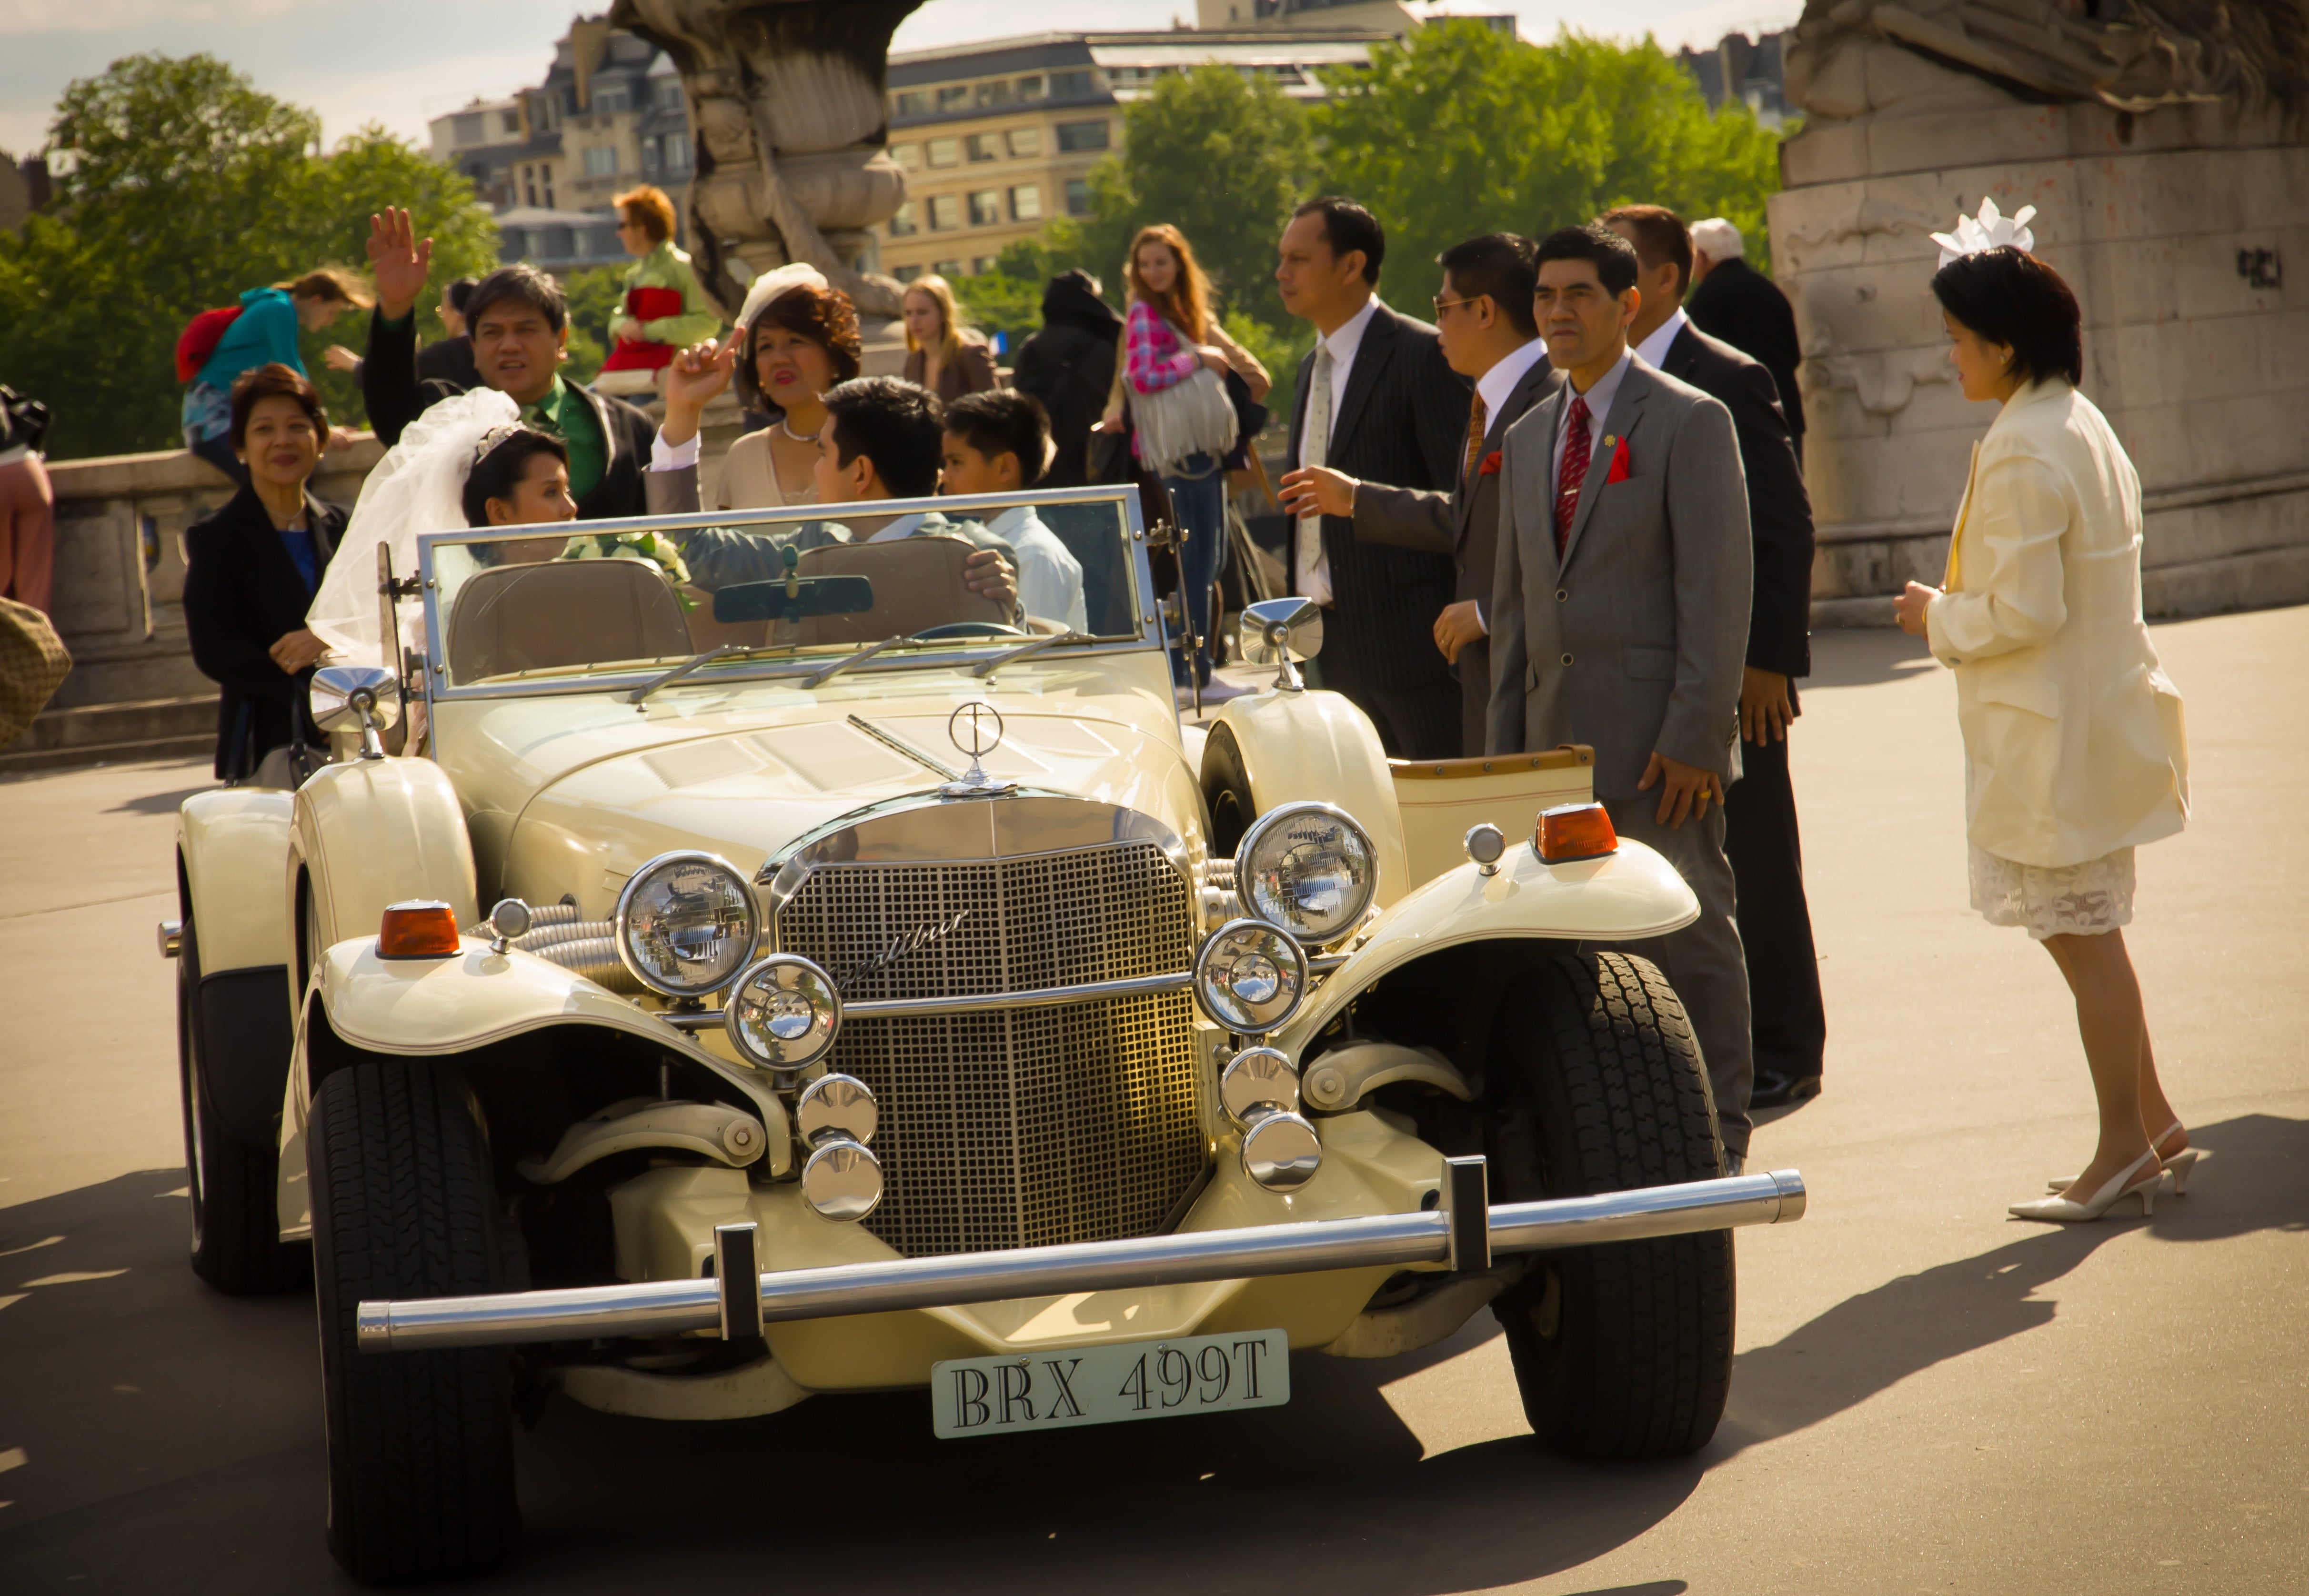 classic beige car and men's gray suit, weddings, Paris, Excalibur